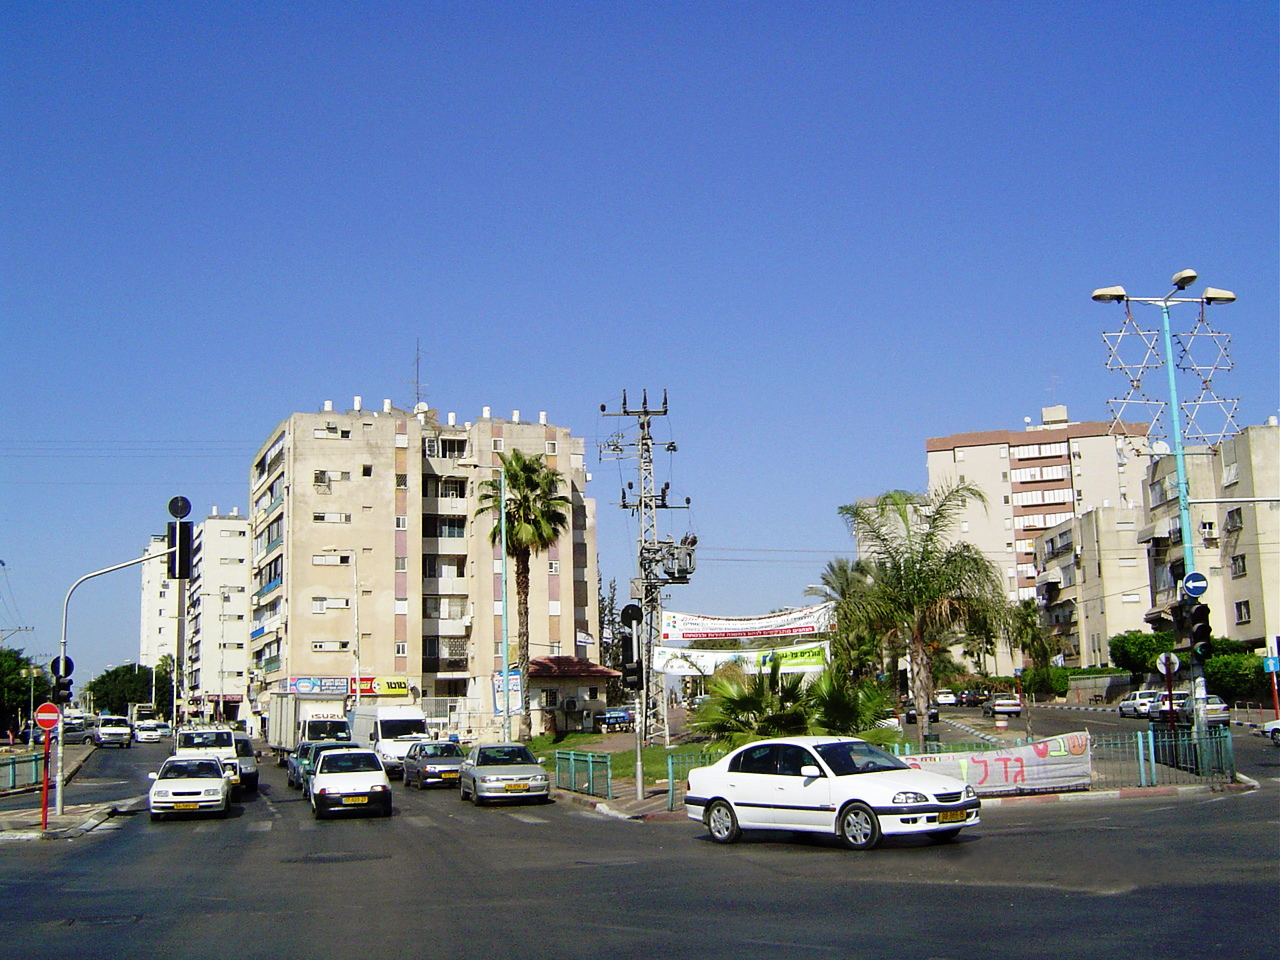 File:Downtown area of Lod, Israel 00262.JPG - Wikipedia